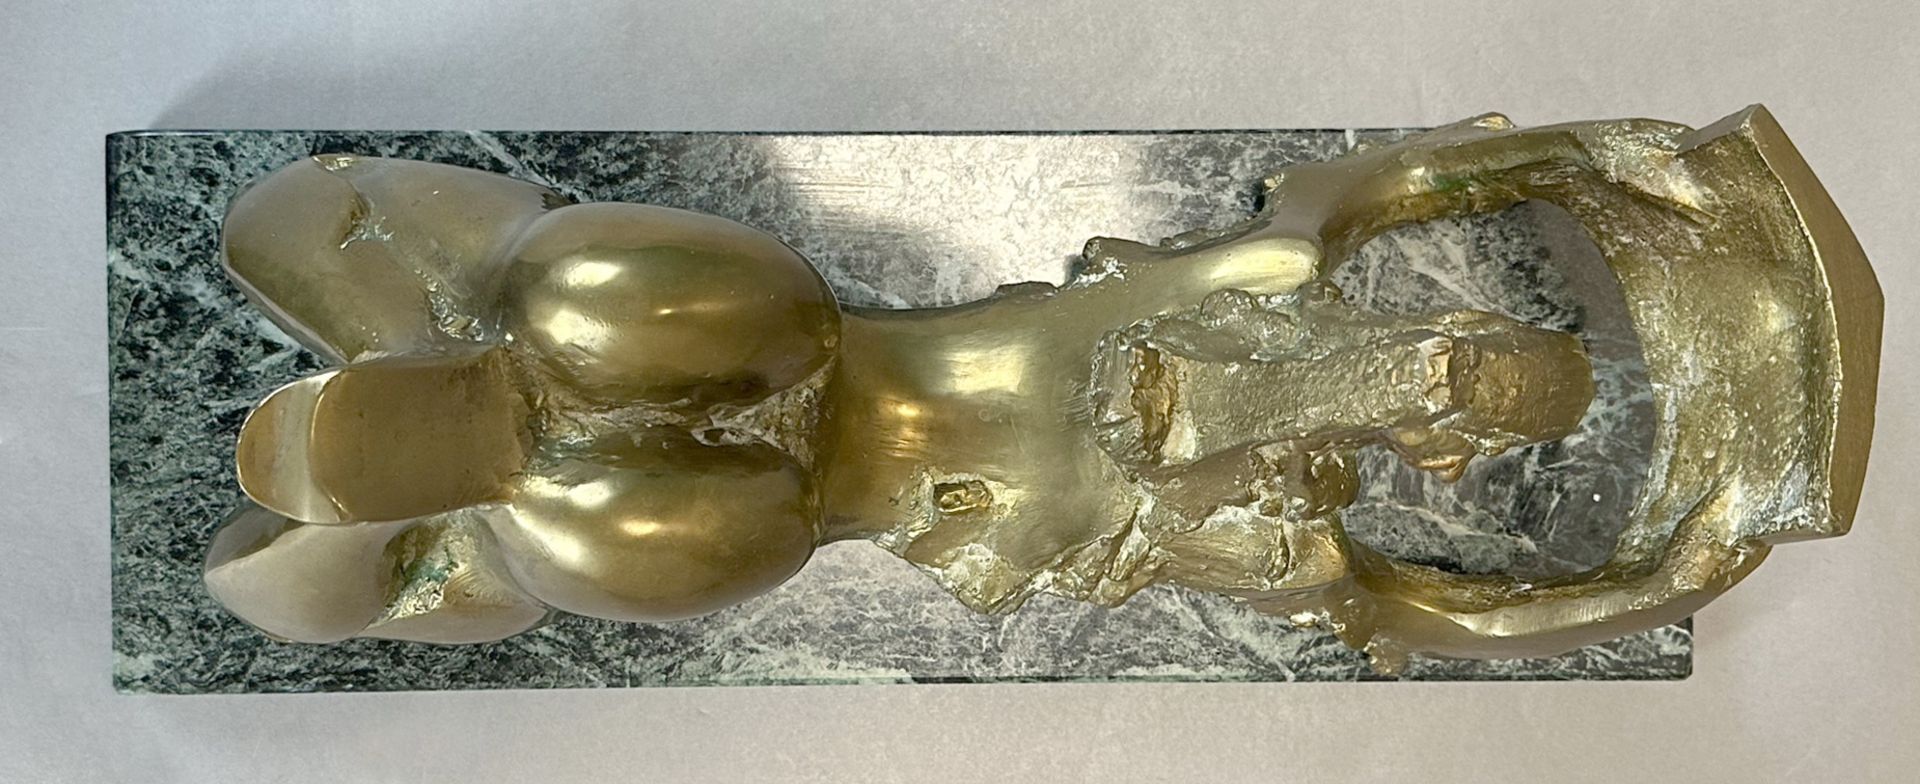 Dako DAKOV (1923). Bronze. "Torso". Reclining female nude. 1983 - Image 5 of 12